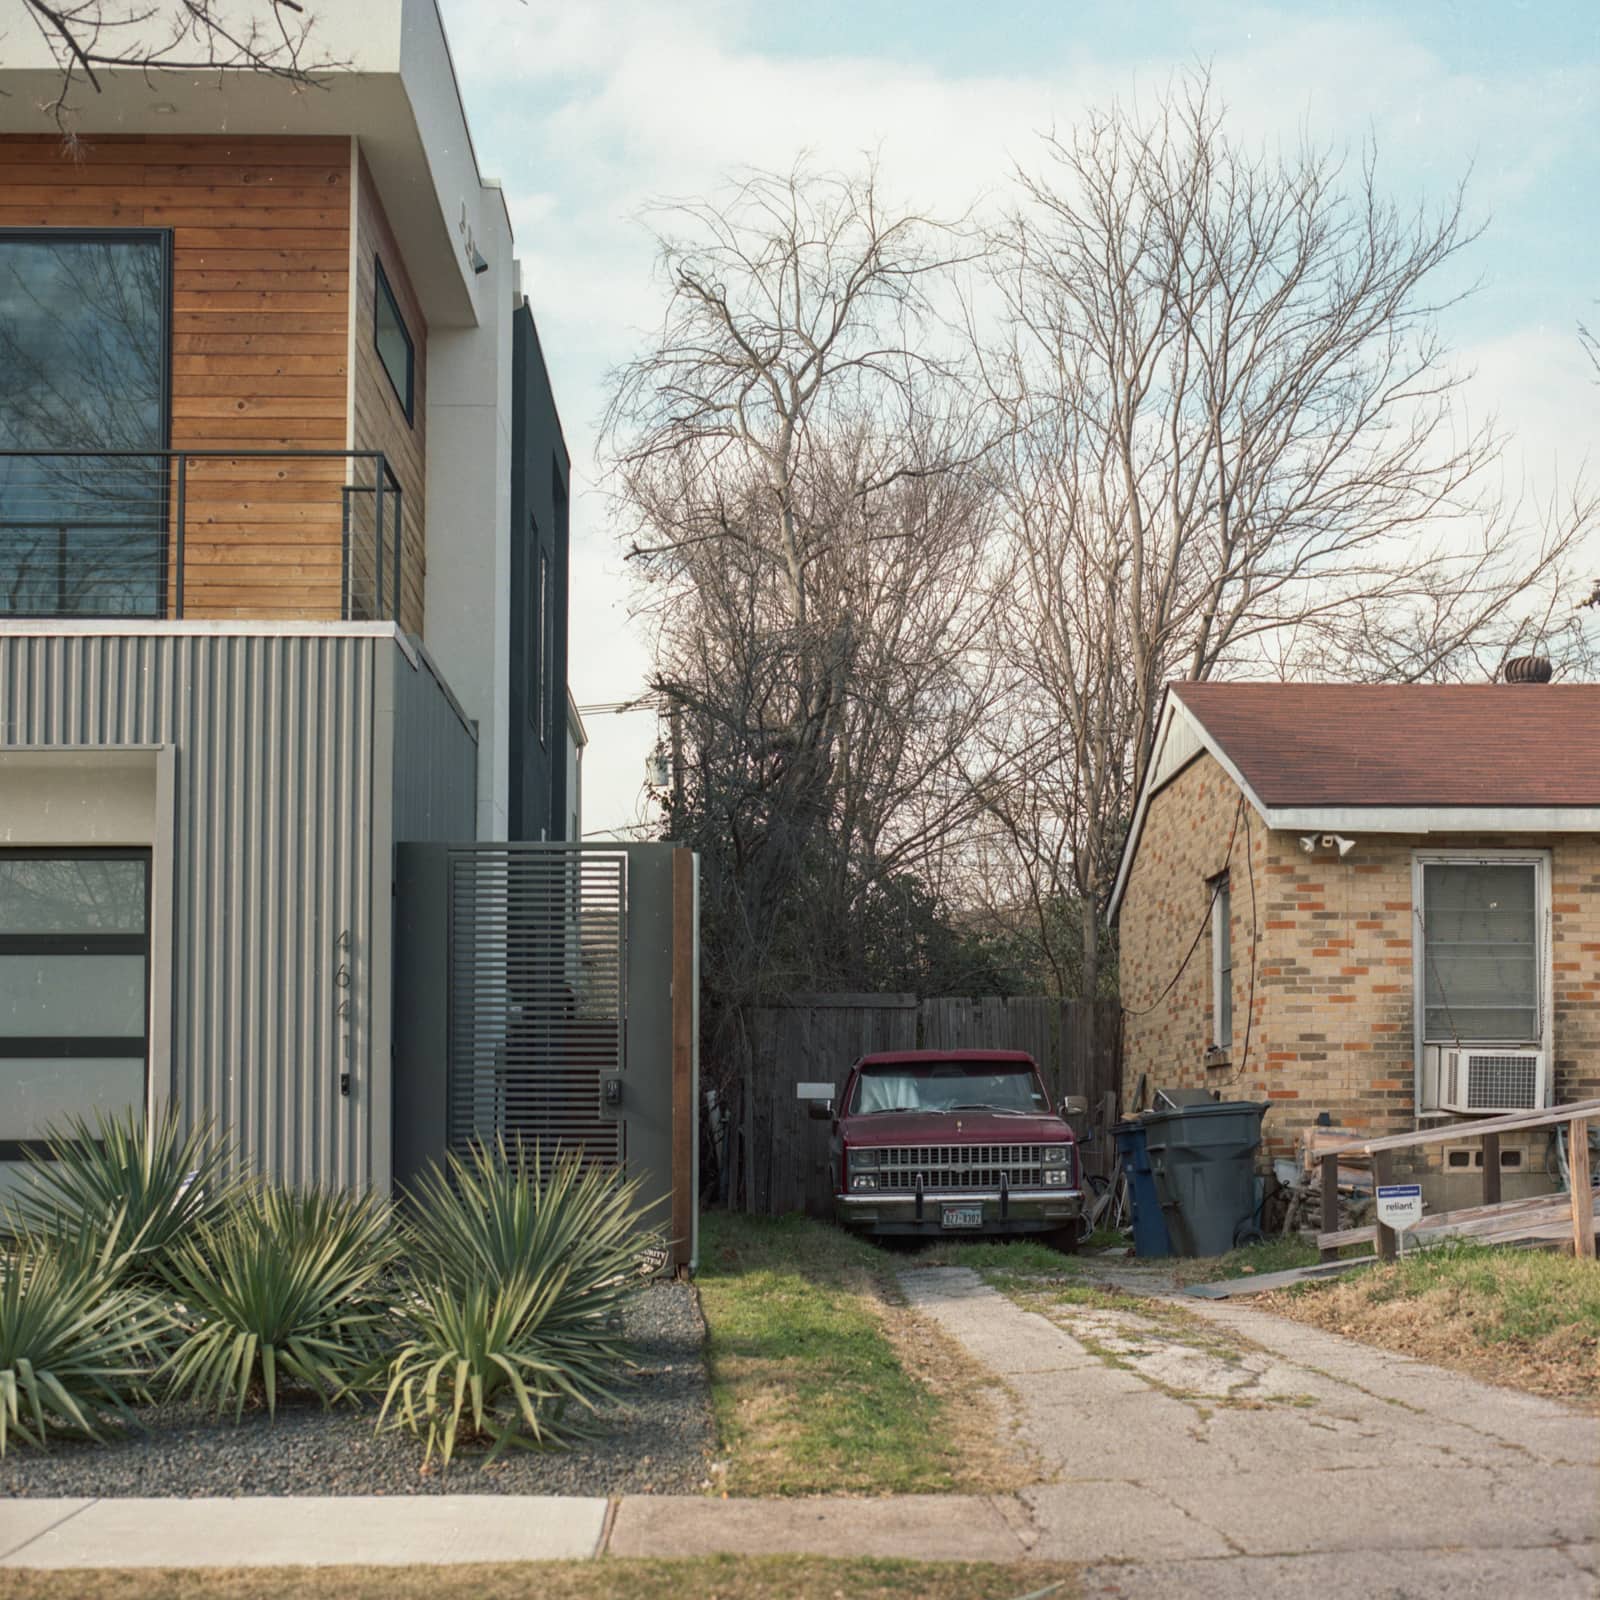 Neighborhood Gentrification in Old East Dallas